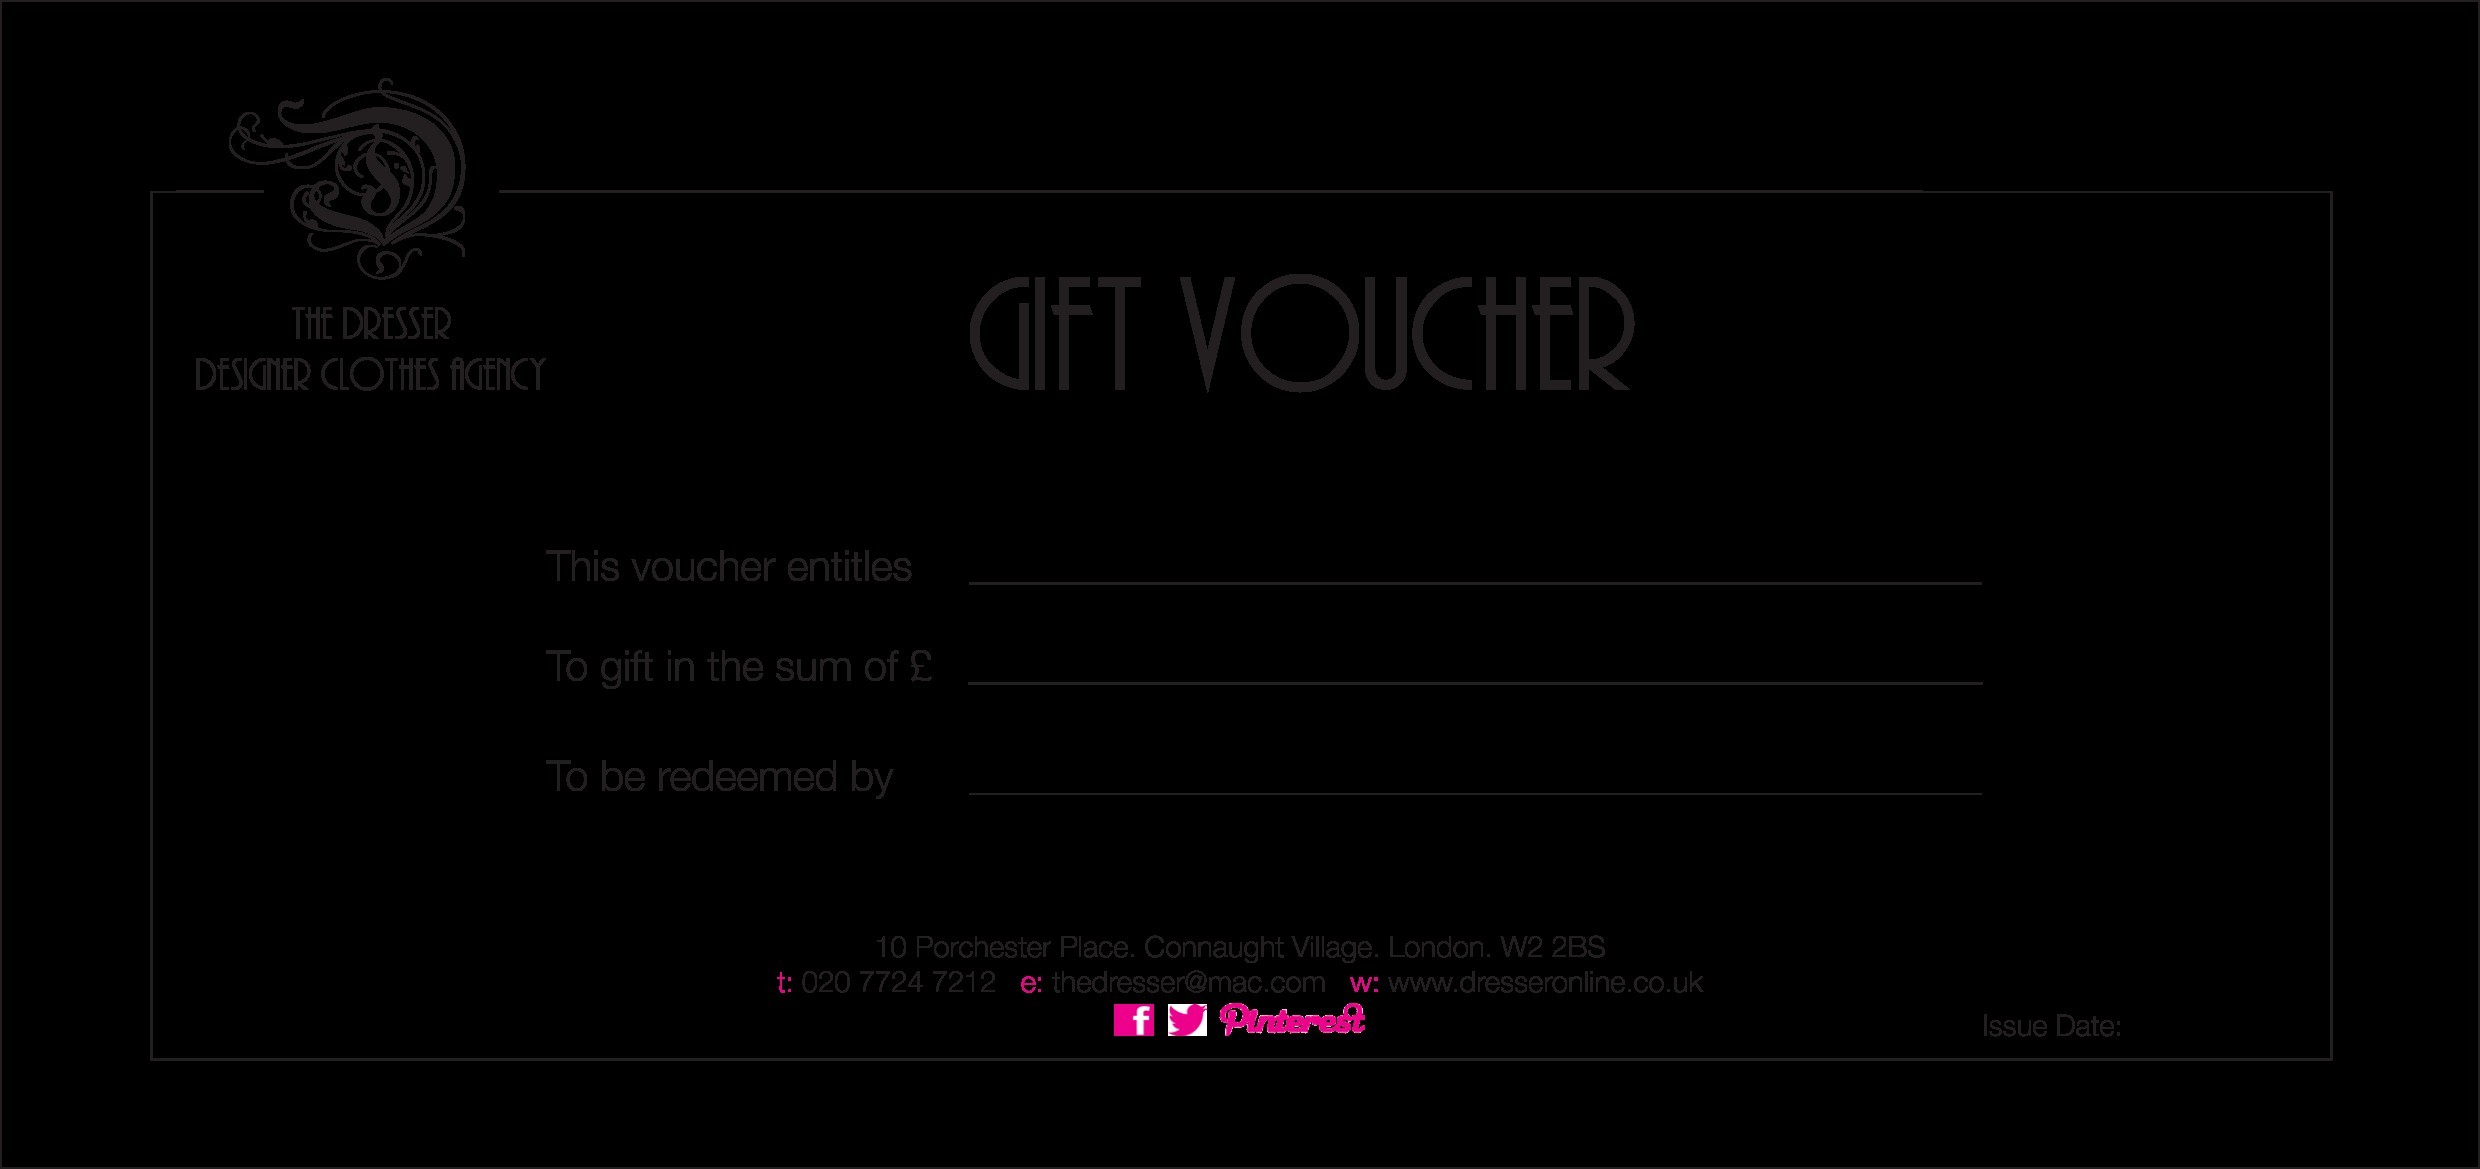 Free Printable Gift Voucher Templates Uk Christmas Certificate - Free Printable Gift Vouchers Uk